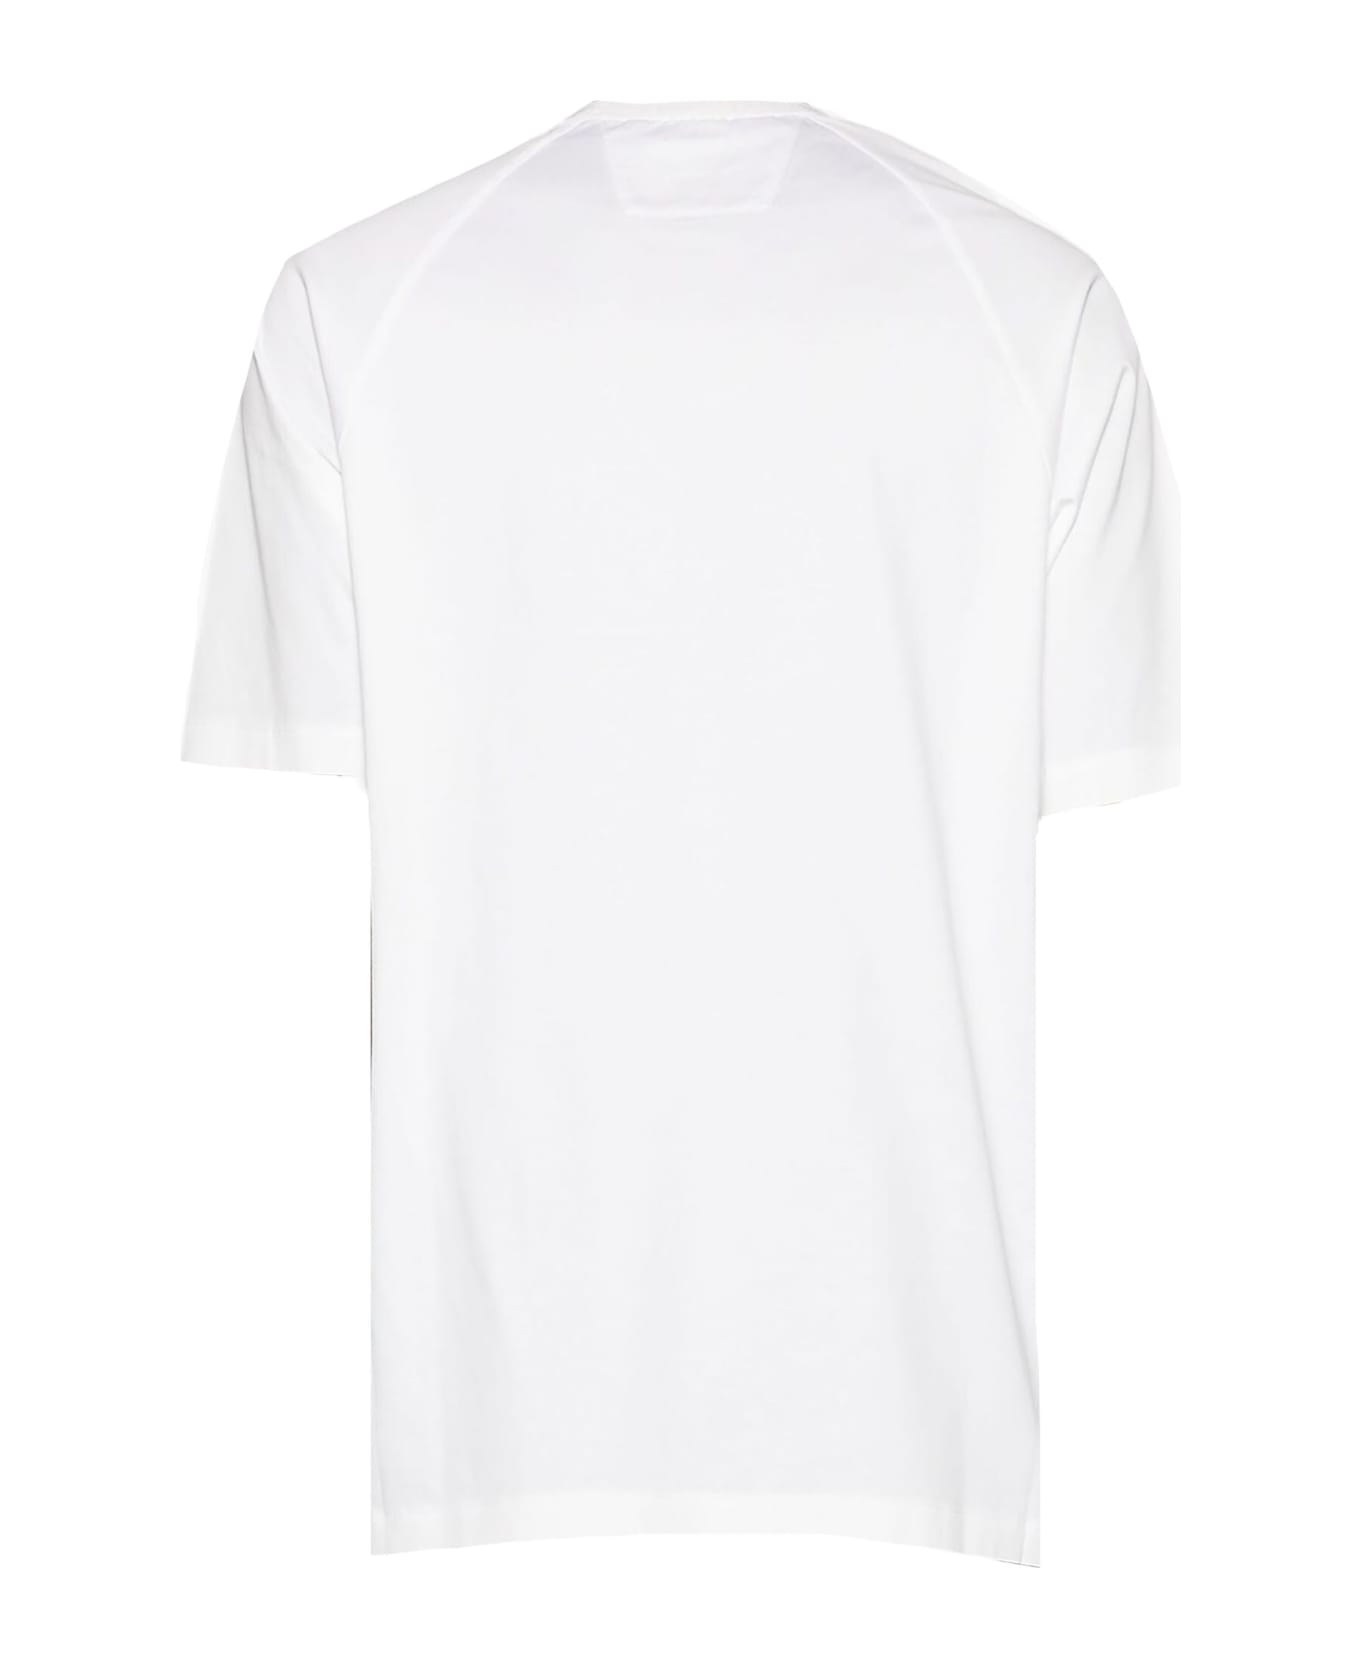 C.P. Company Metropolis Series T-shirt - White